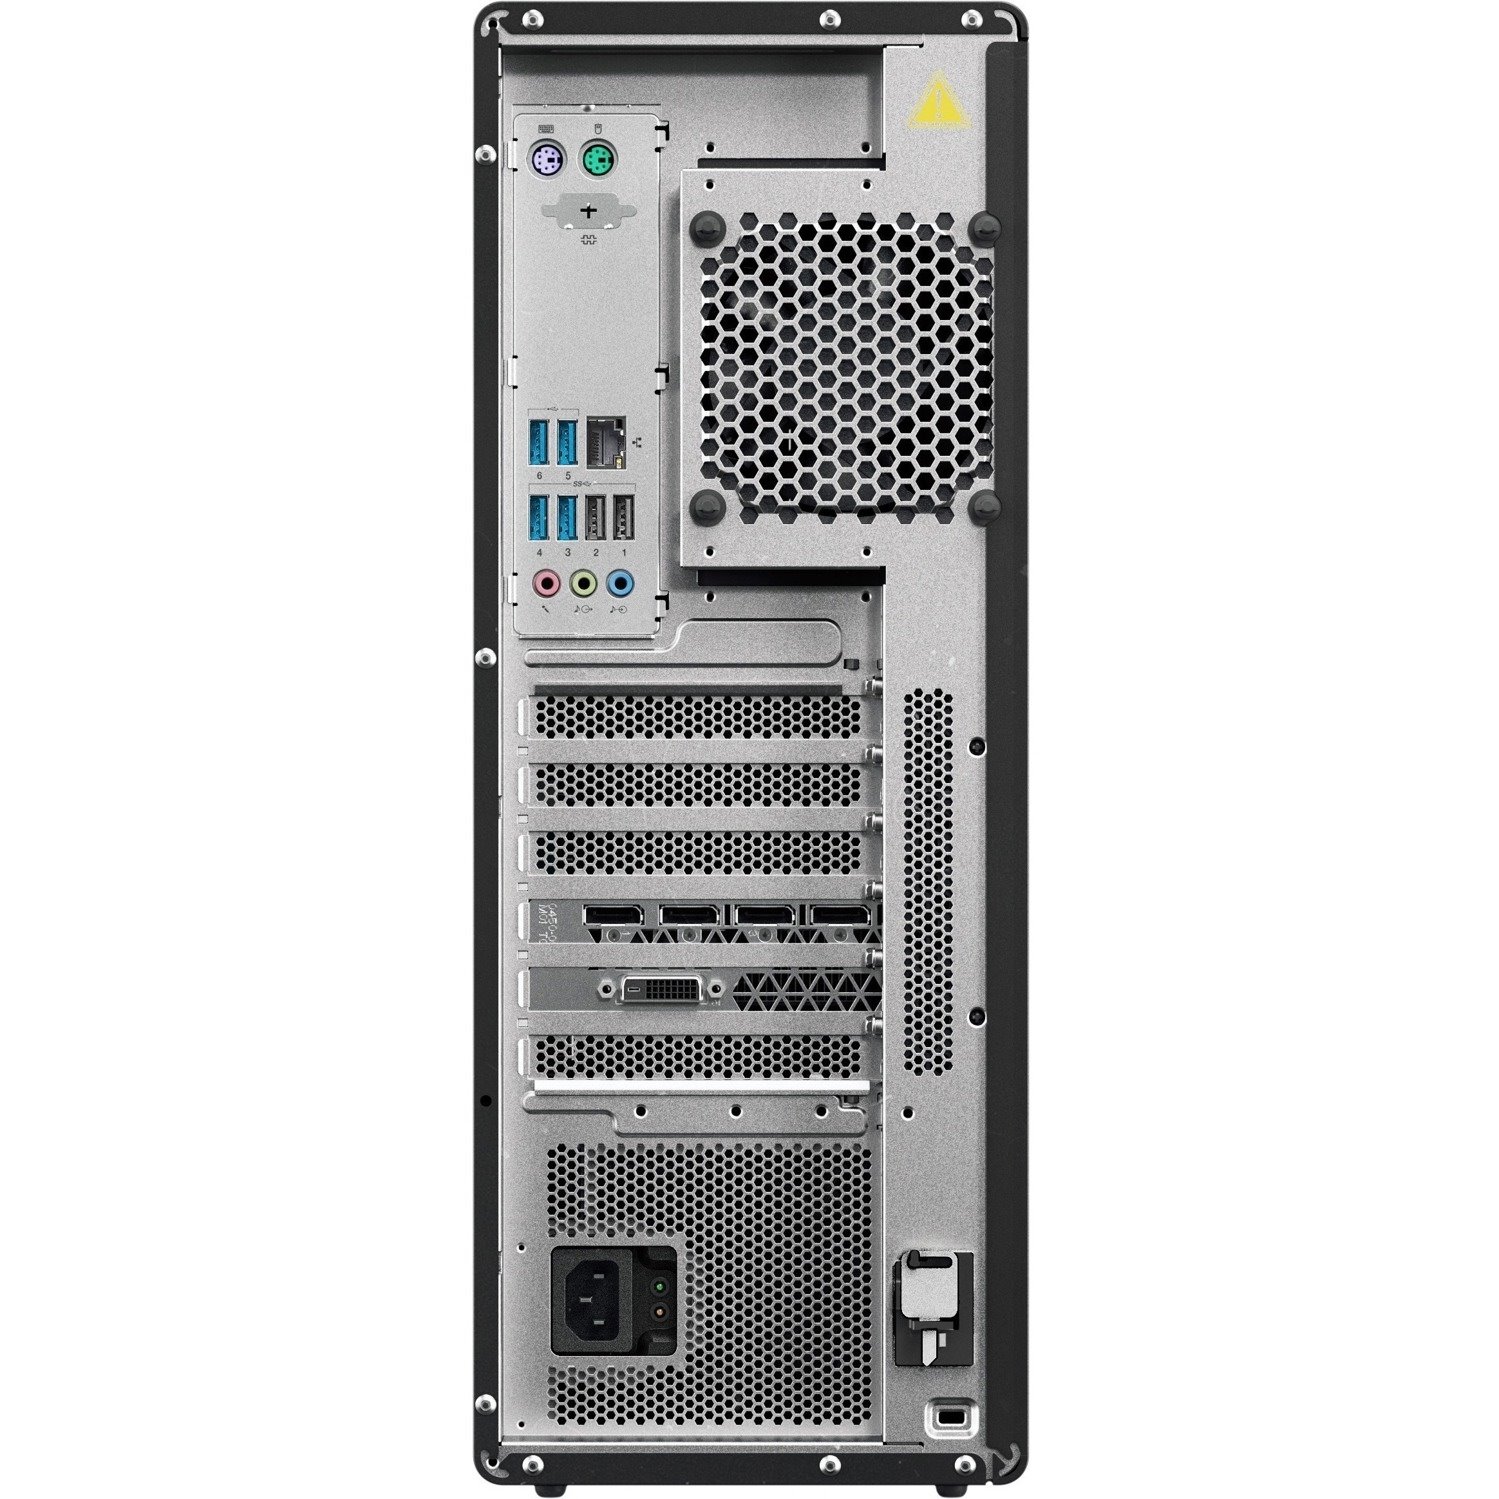 Lenovo ThinkStation P520 30BE00NCUS Workstation - 1 x Intel Xeon W-2235 - 32 GB - 1 TB SSD - Tower